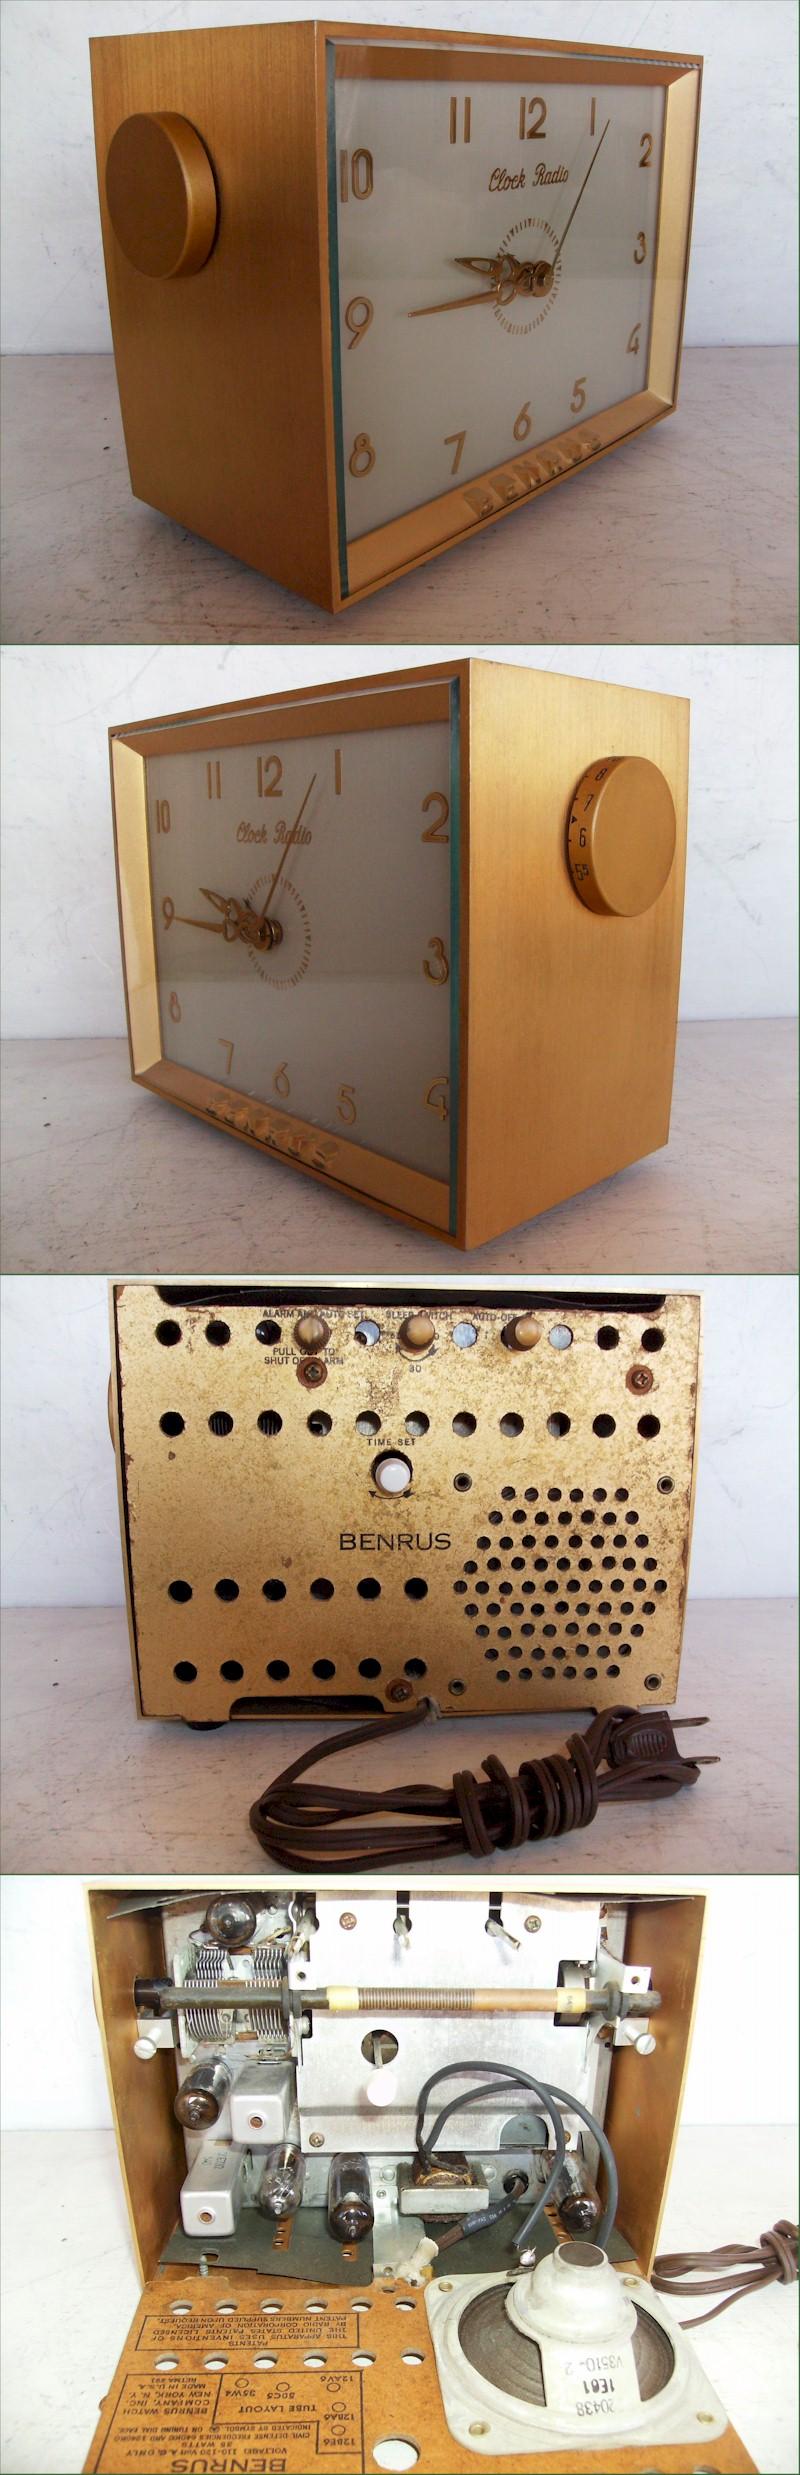 Benrus Clock Radio (1955)